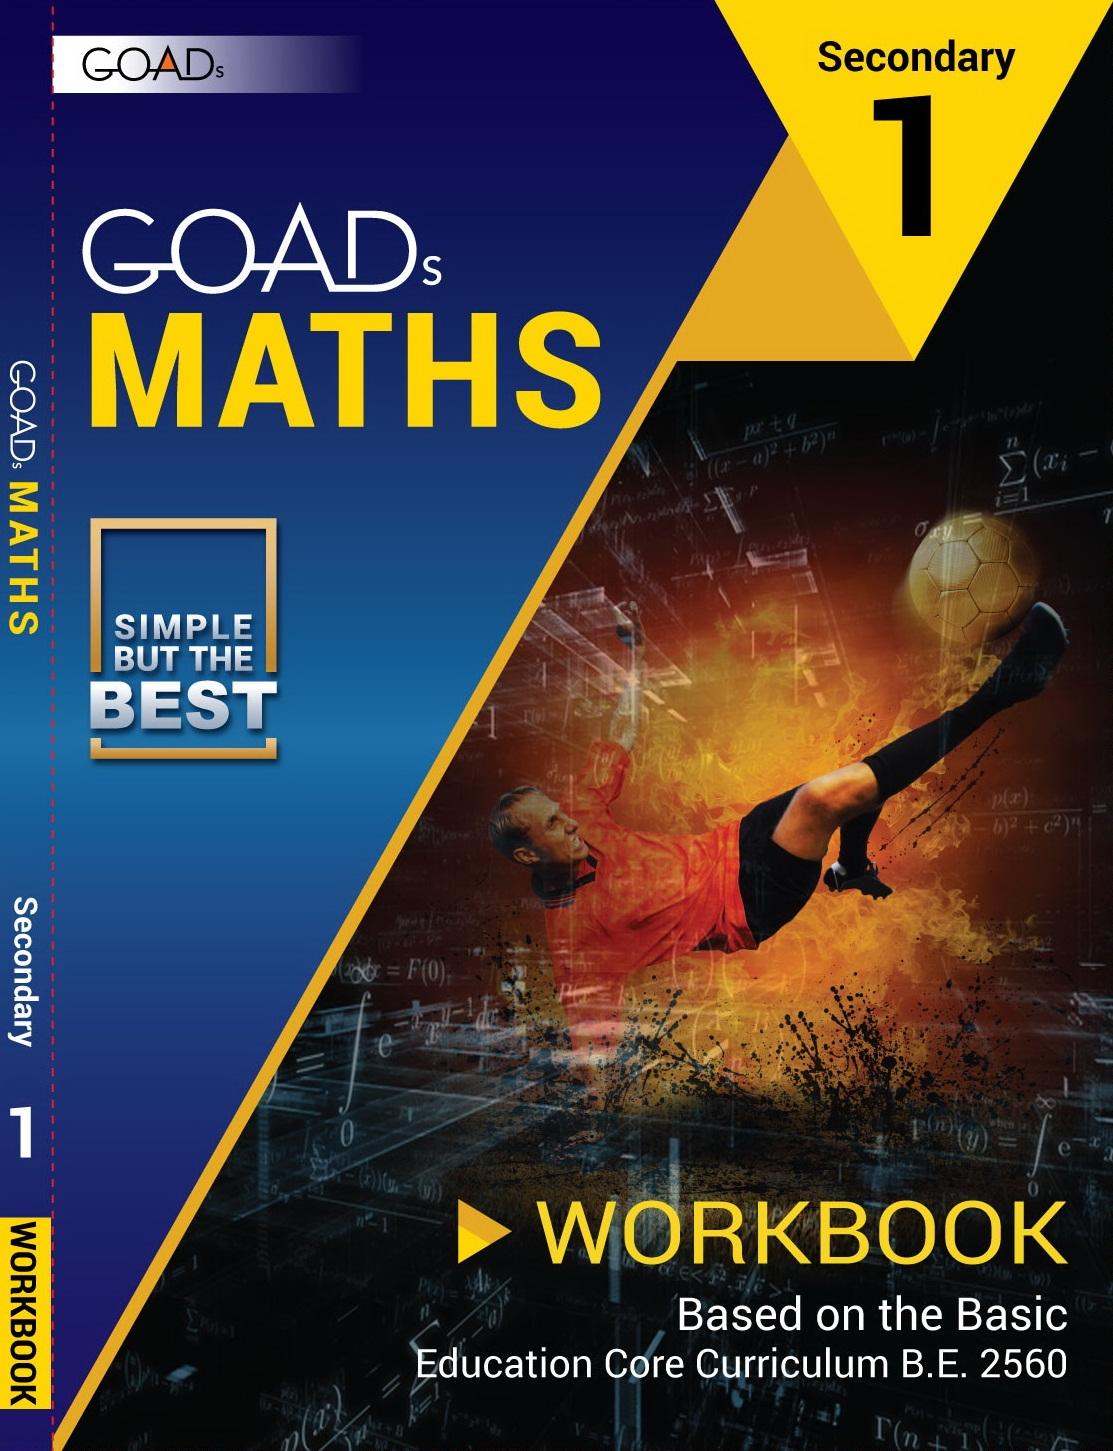 GOADs Mathematics is a series of Workbooks